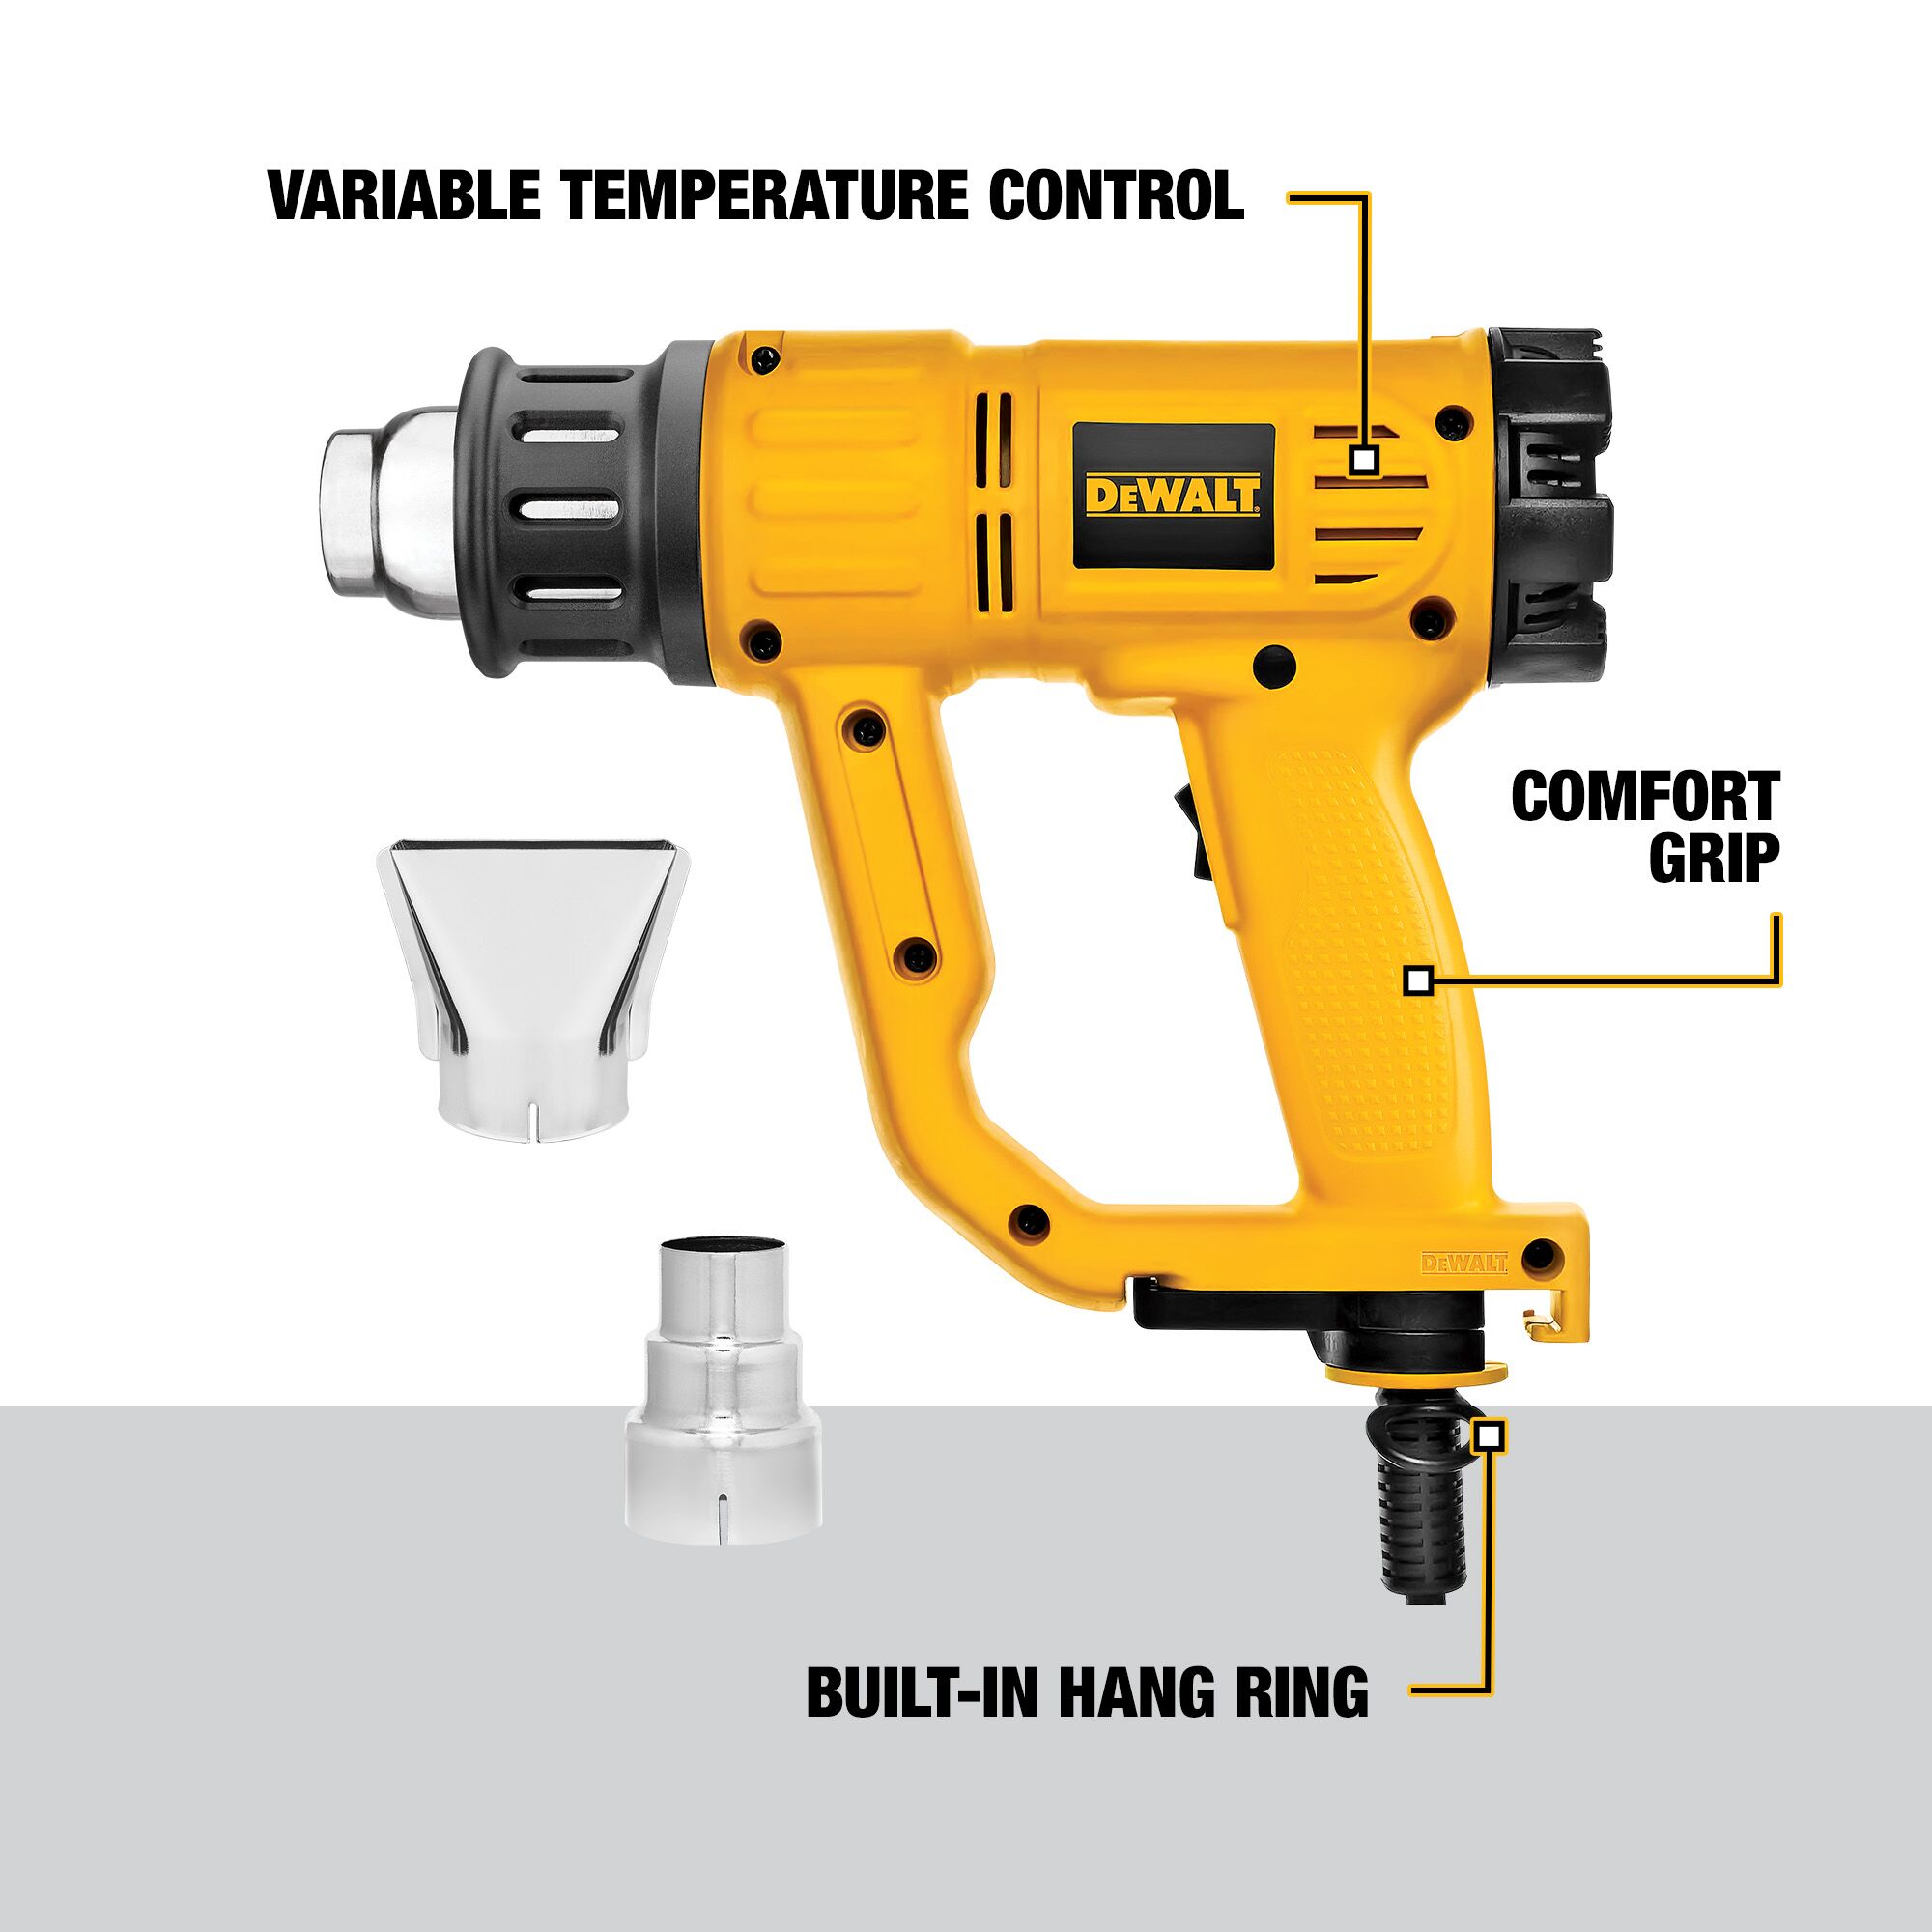 DeWalt Heat Gun Review - D26950 Inside and out 